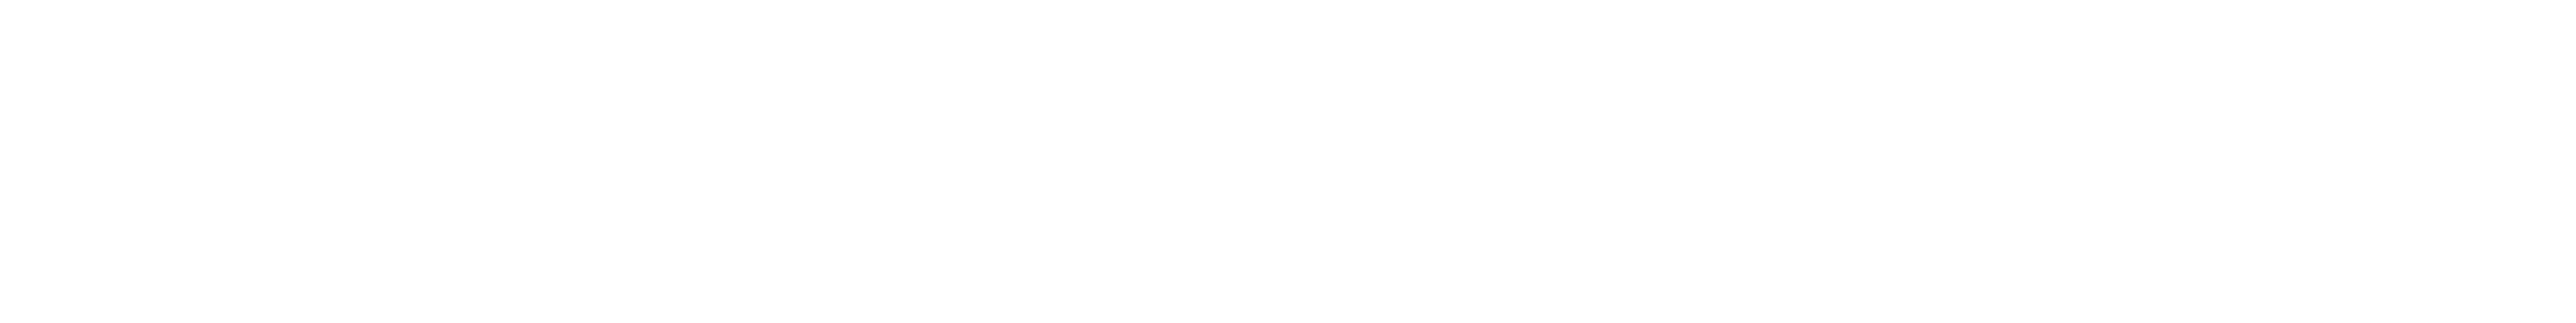 white dish wireless logo